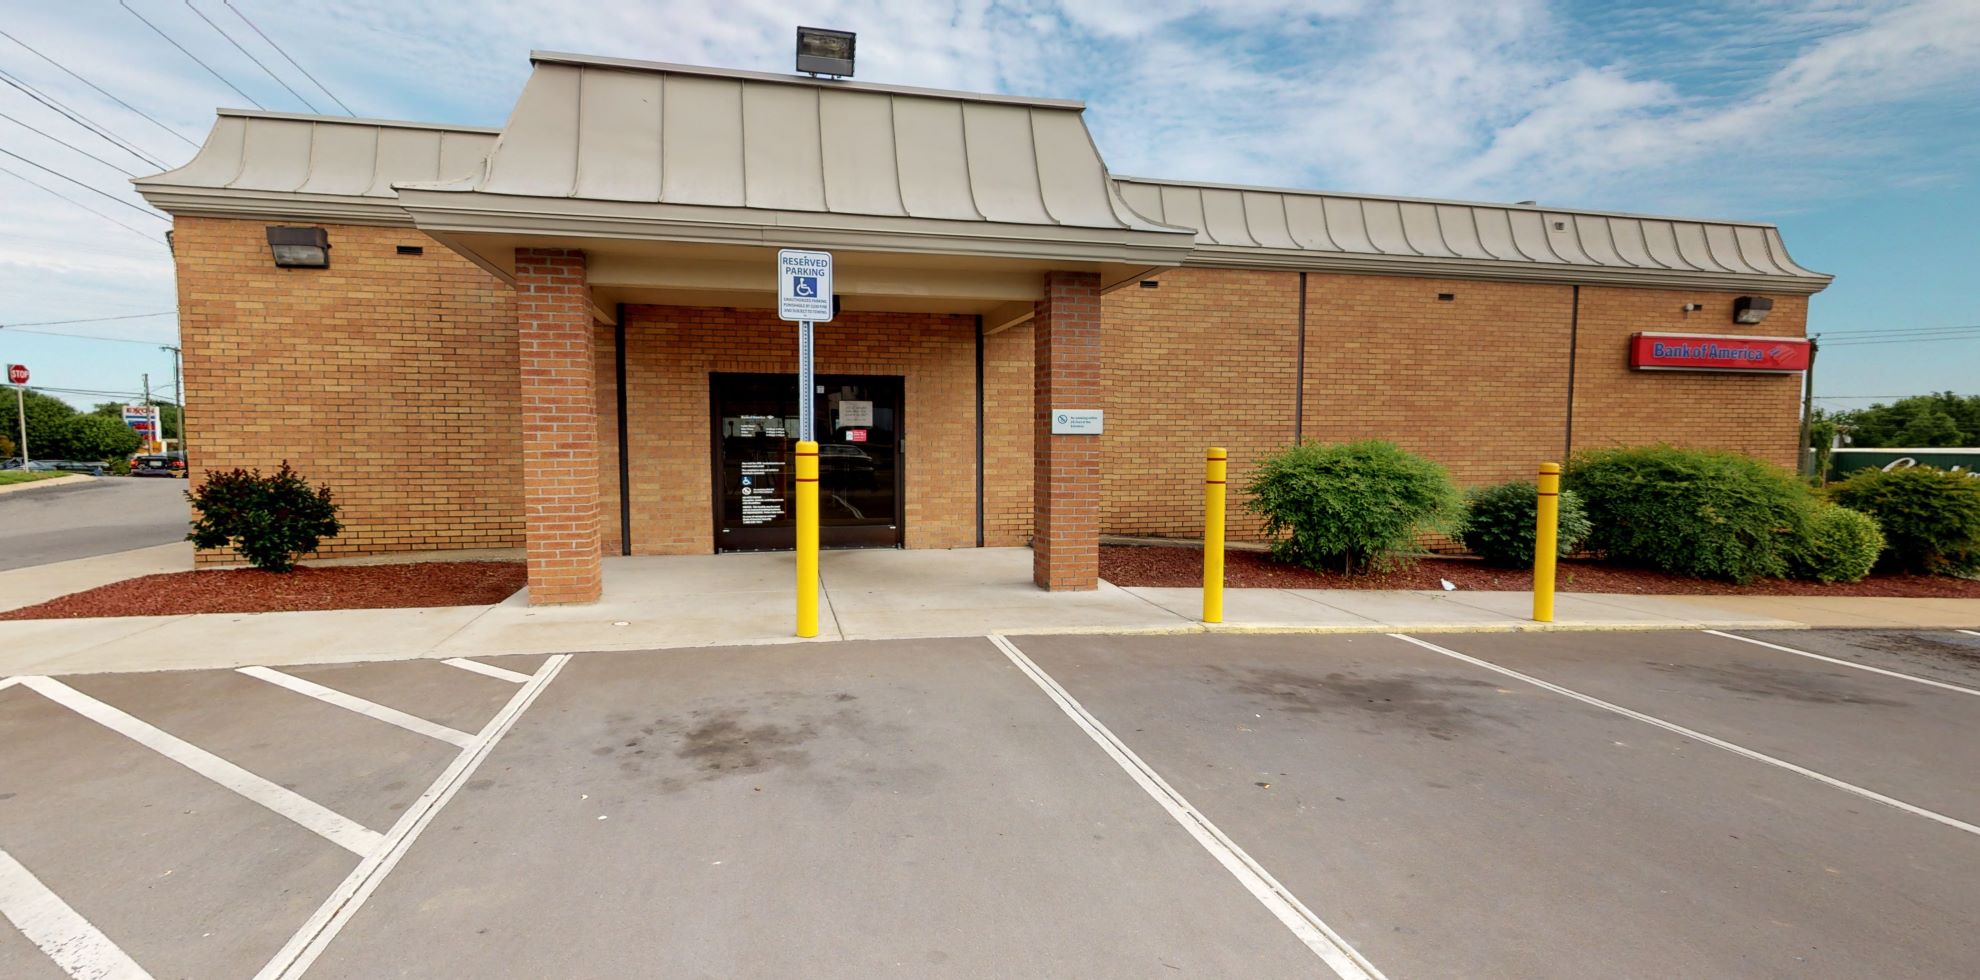 Bank of America financial center with drive-thru ATM | 3219 Clarksville Pike, Nashville, TN 37218